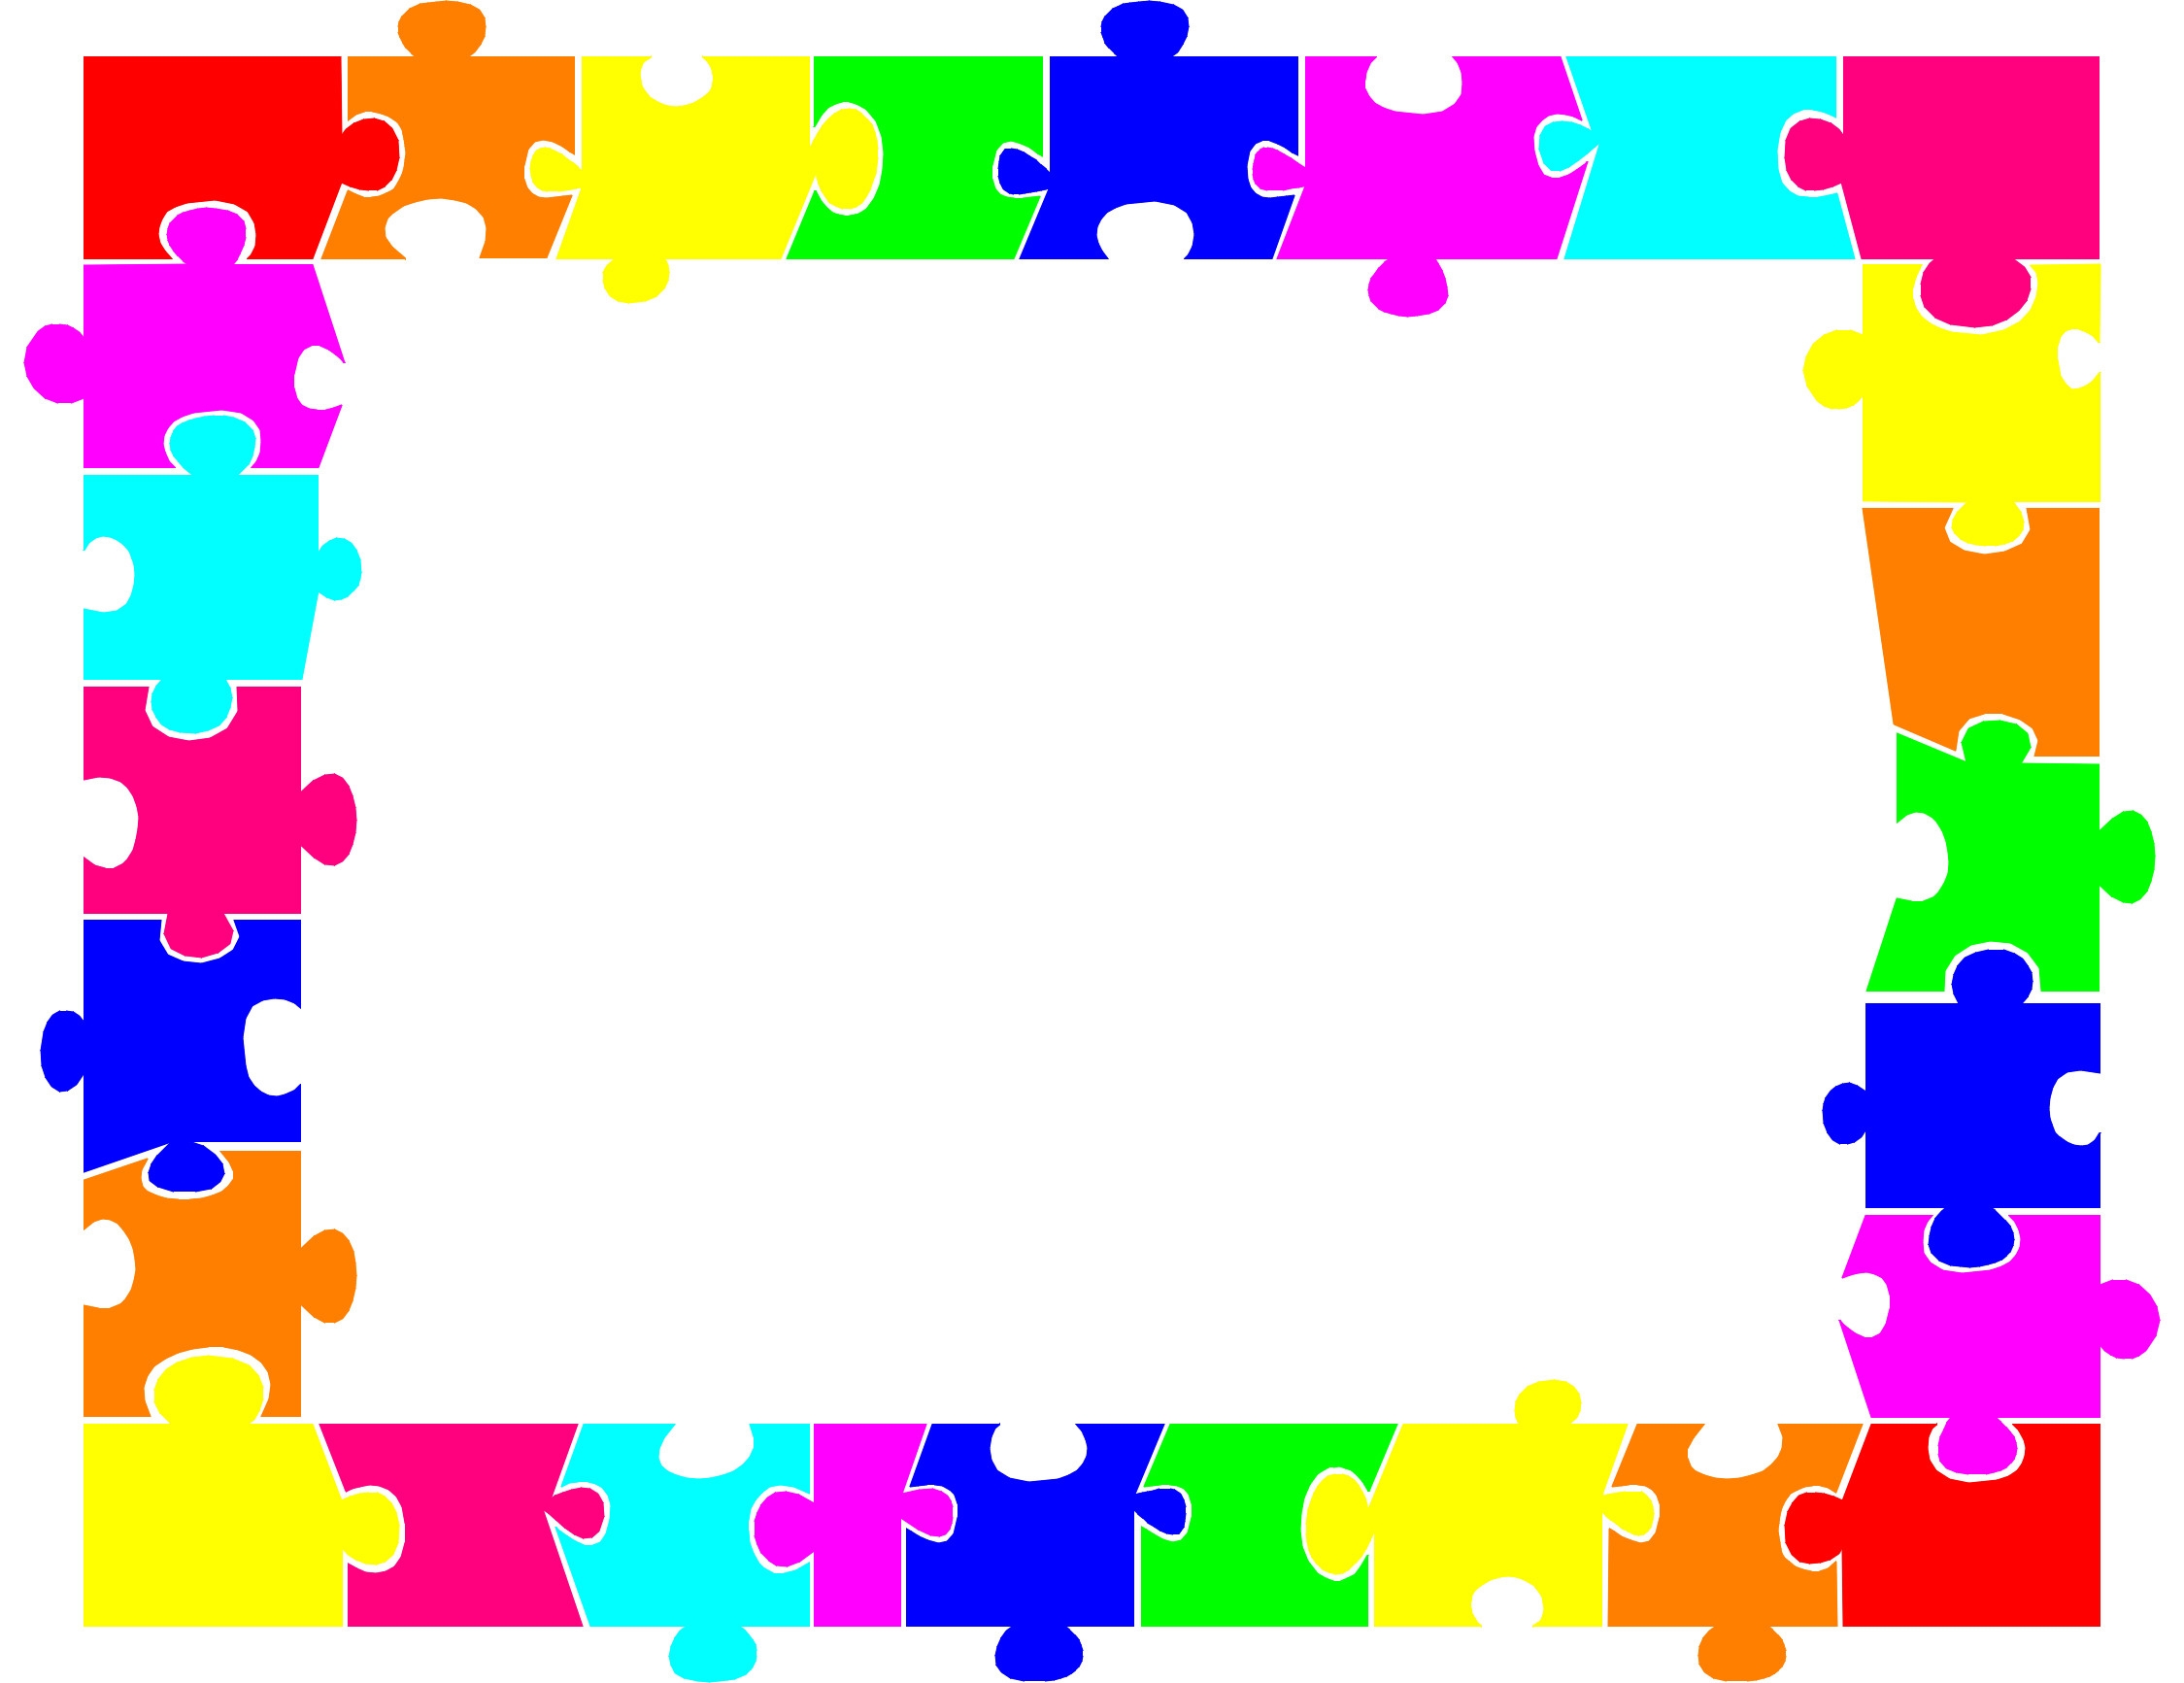 microsoft jigsaw puzzle export